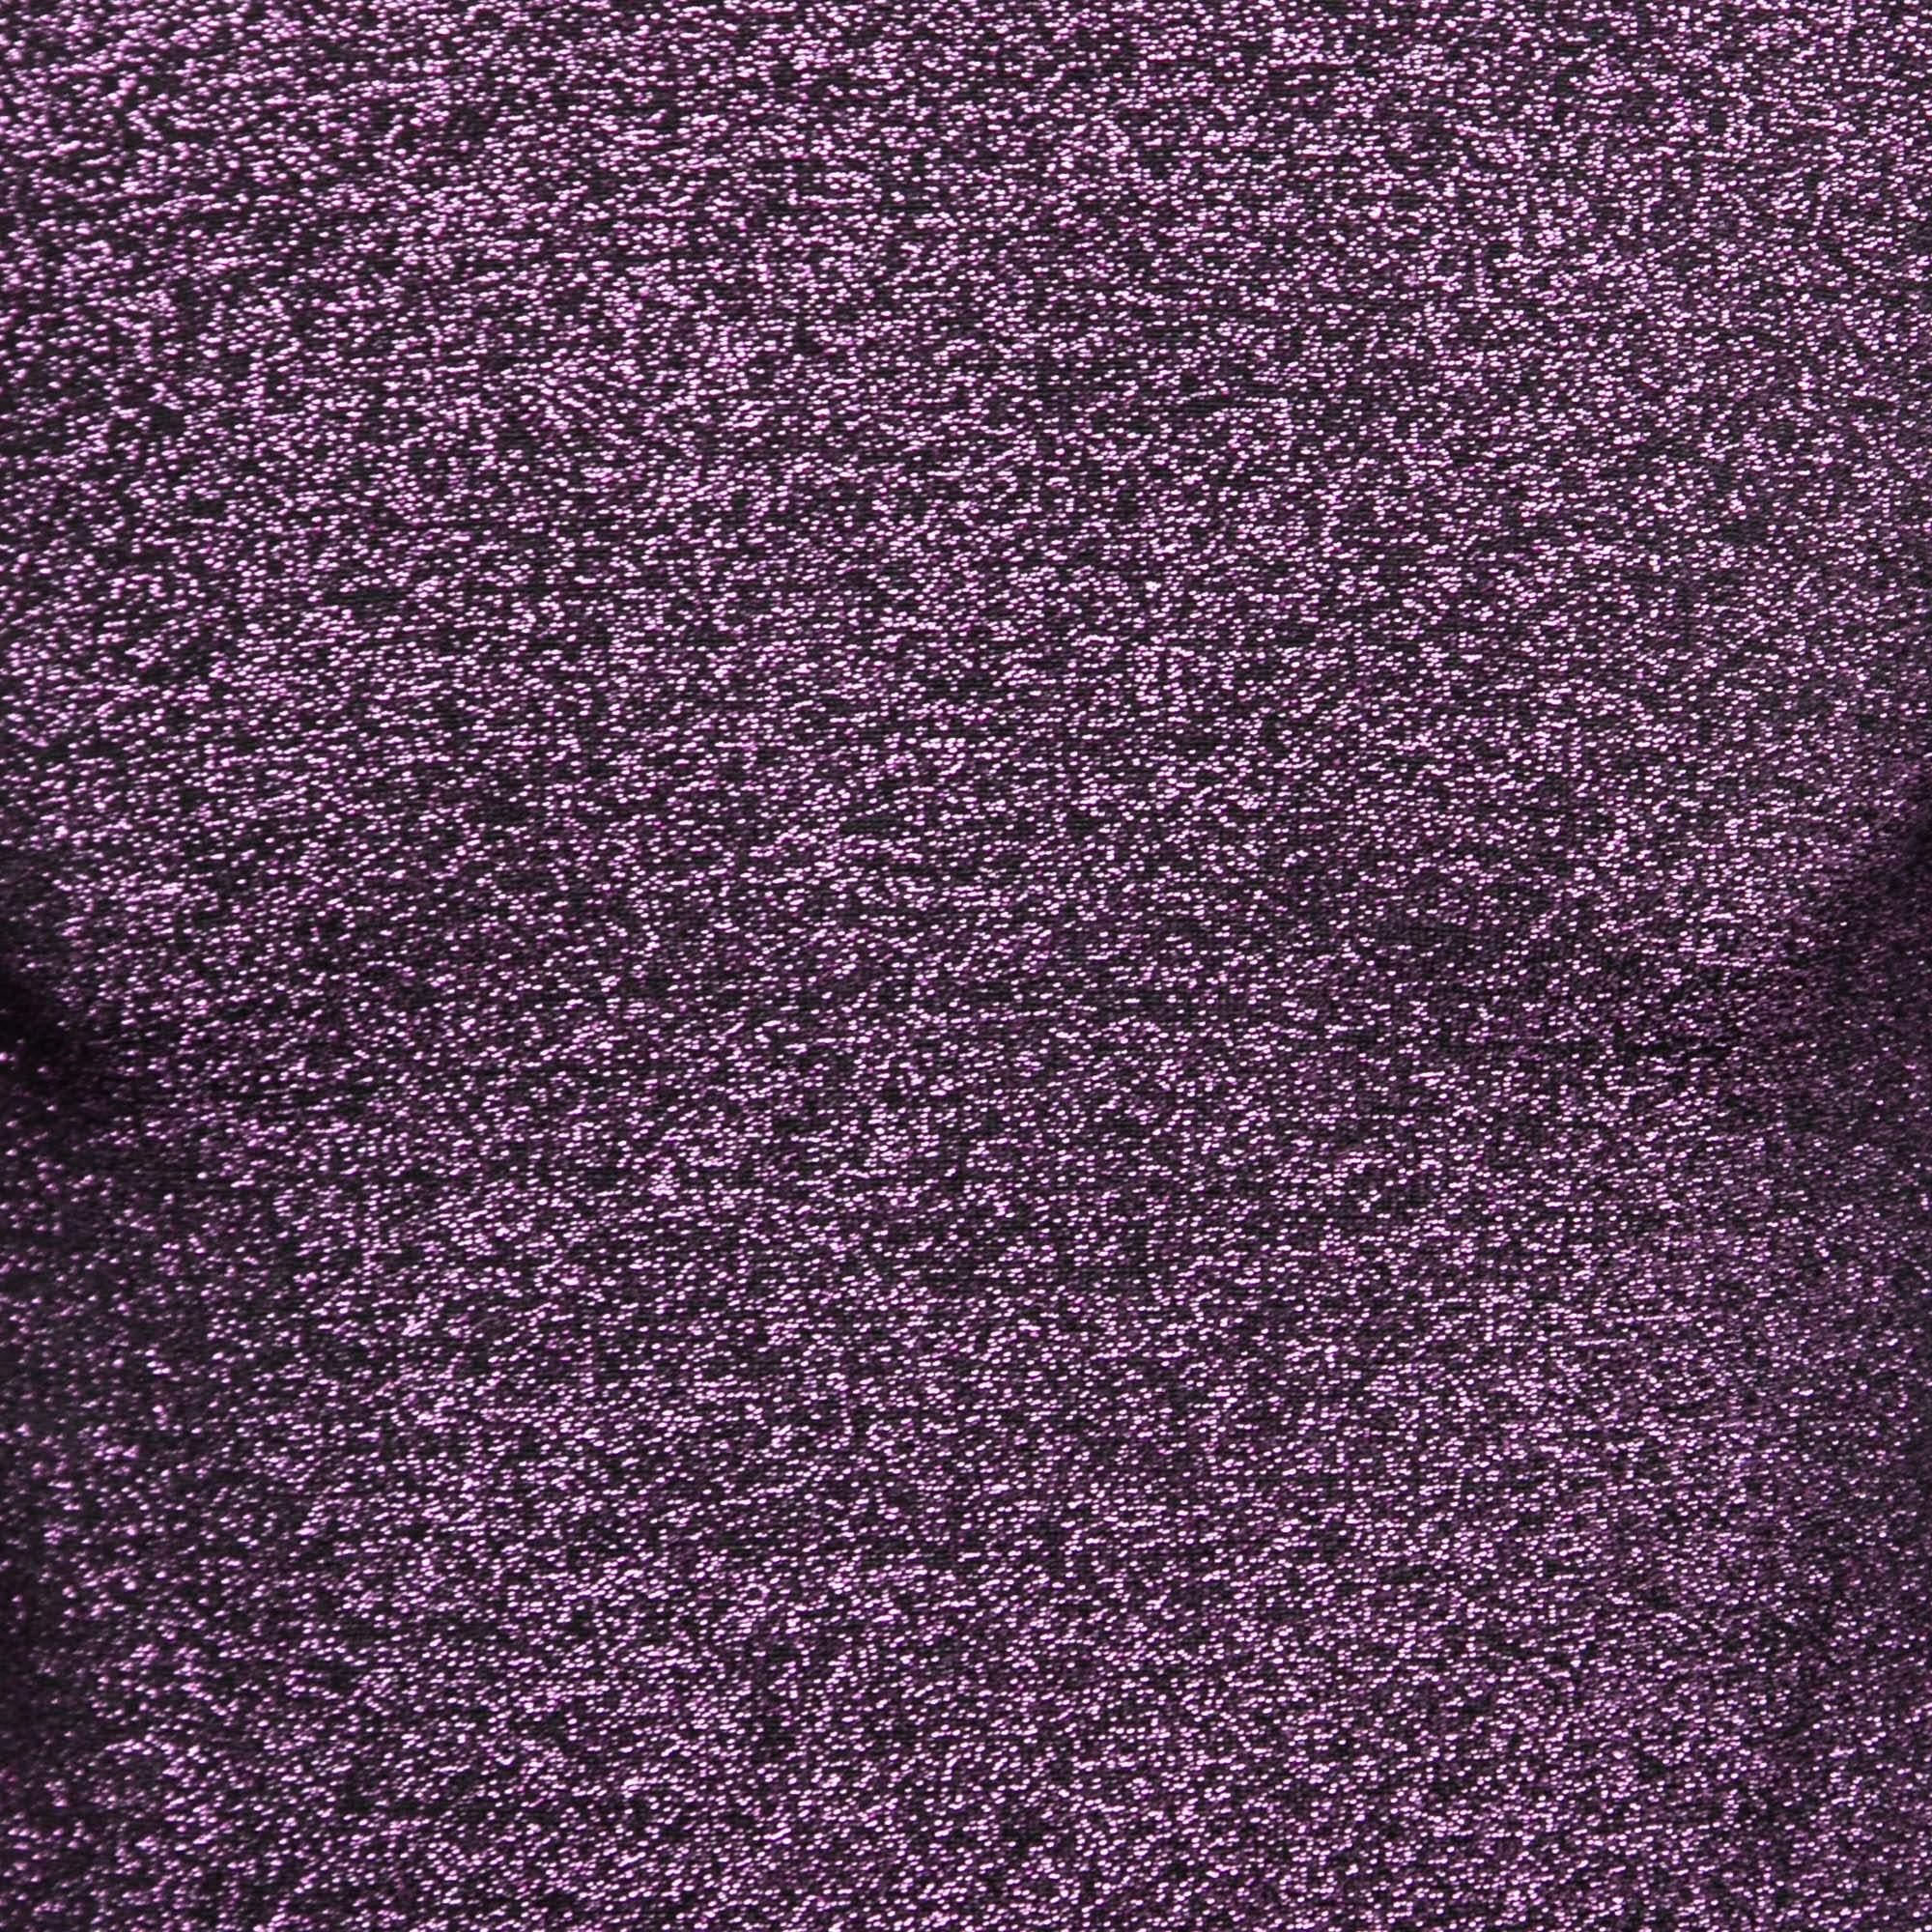 Prada Metallic Purple Lurex Knit Turtle Neck Long Sleeve Sweater L In Excellent Condition For Sale In Dubai, Al Qouz 2